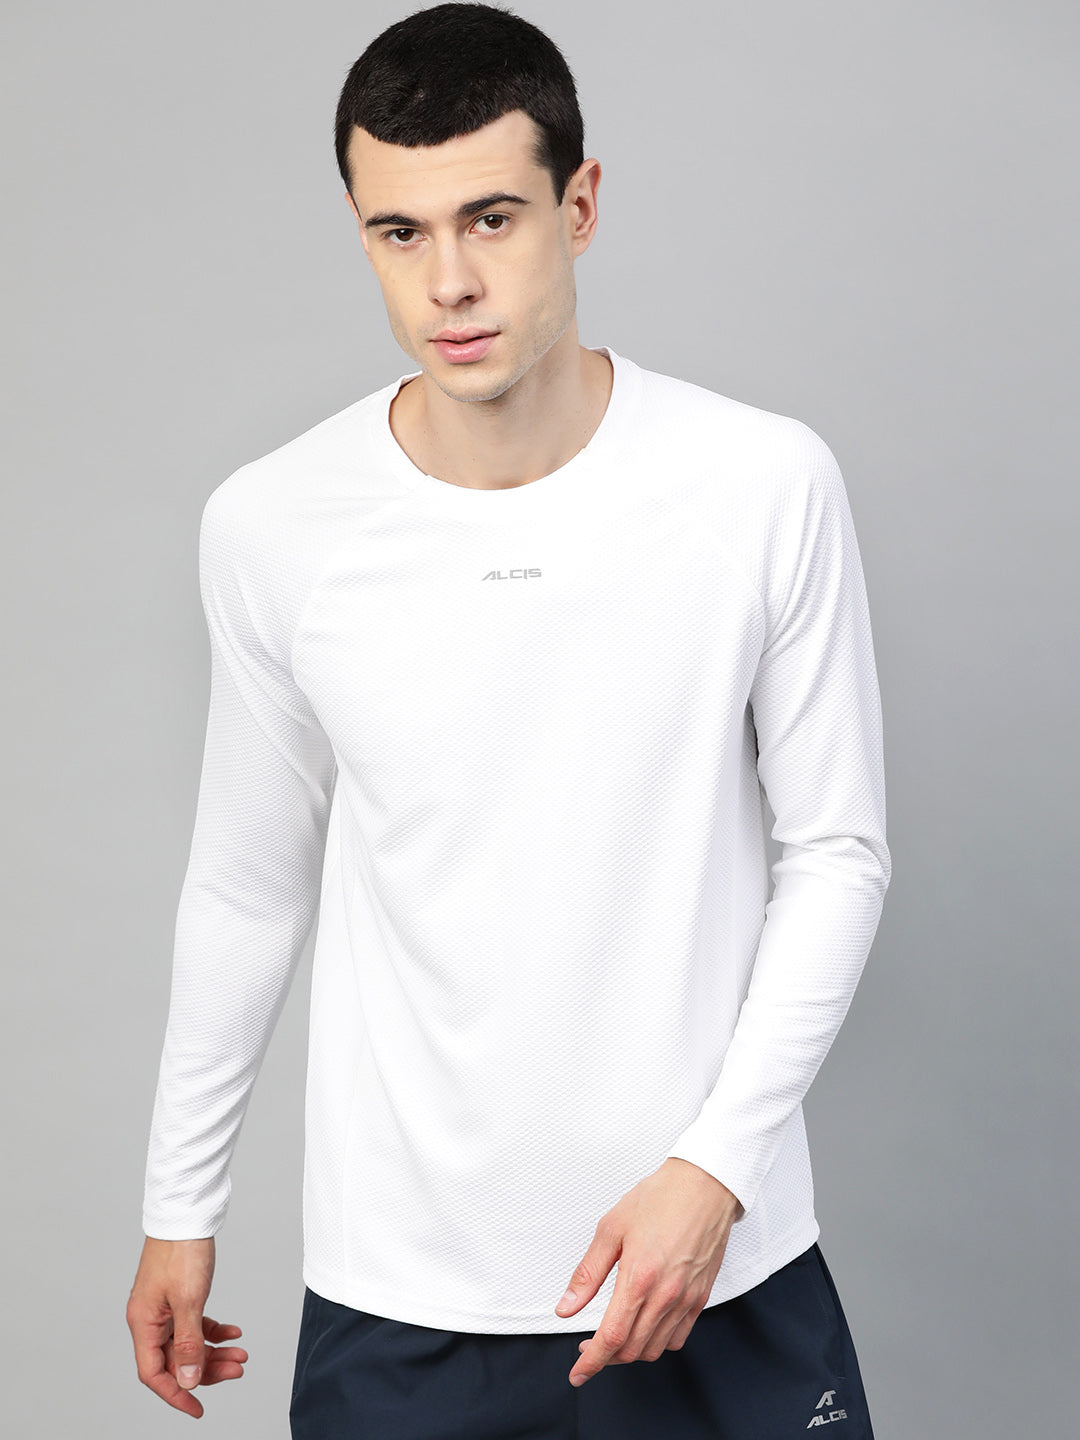 ALCIS Men Solid White Tee T-Shirt